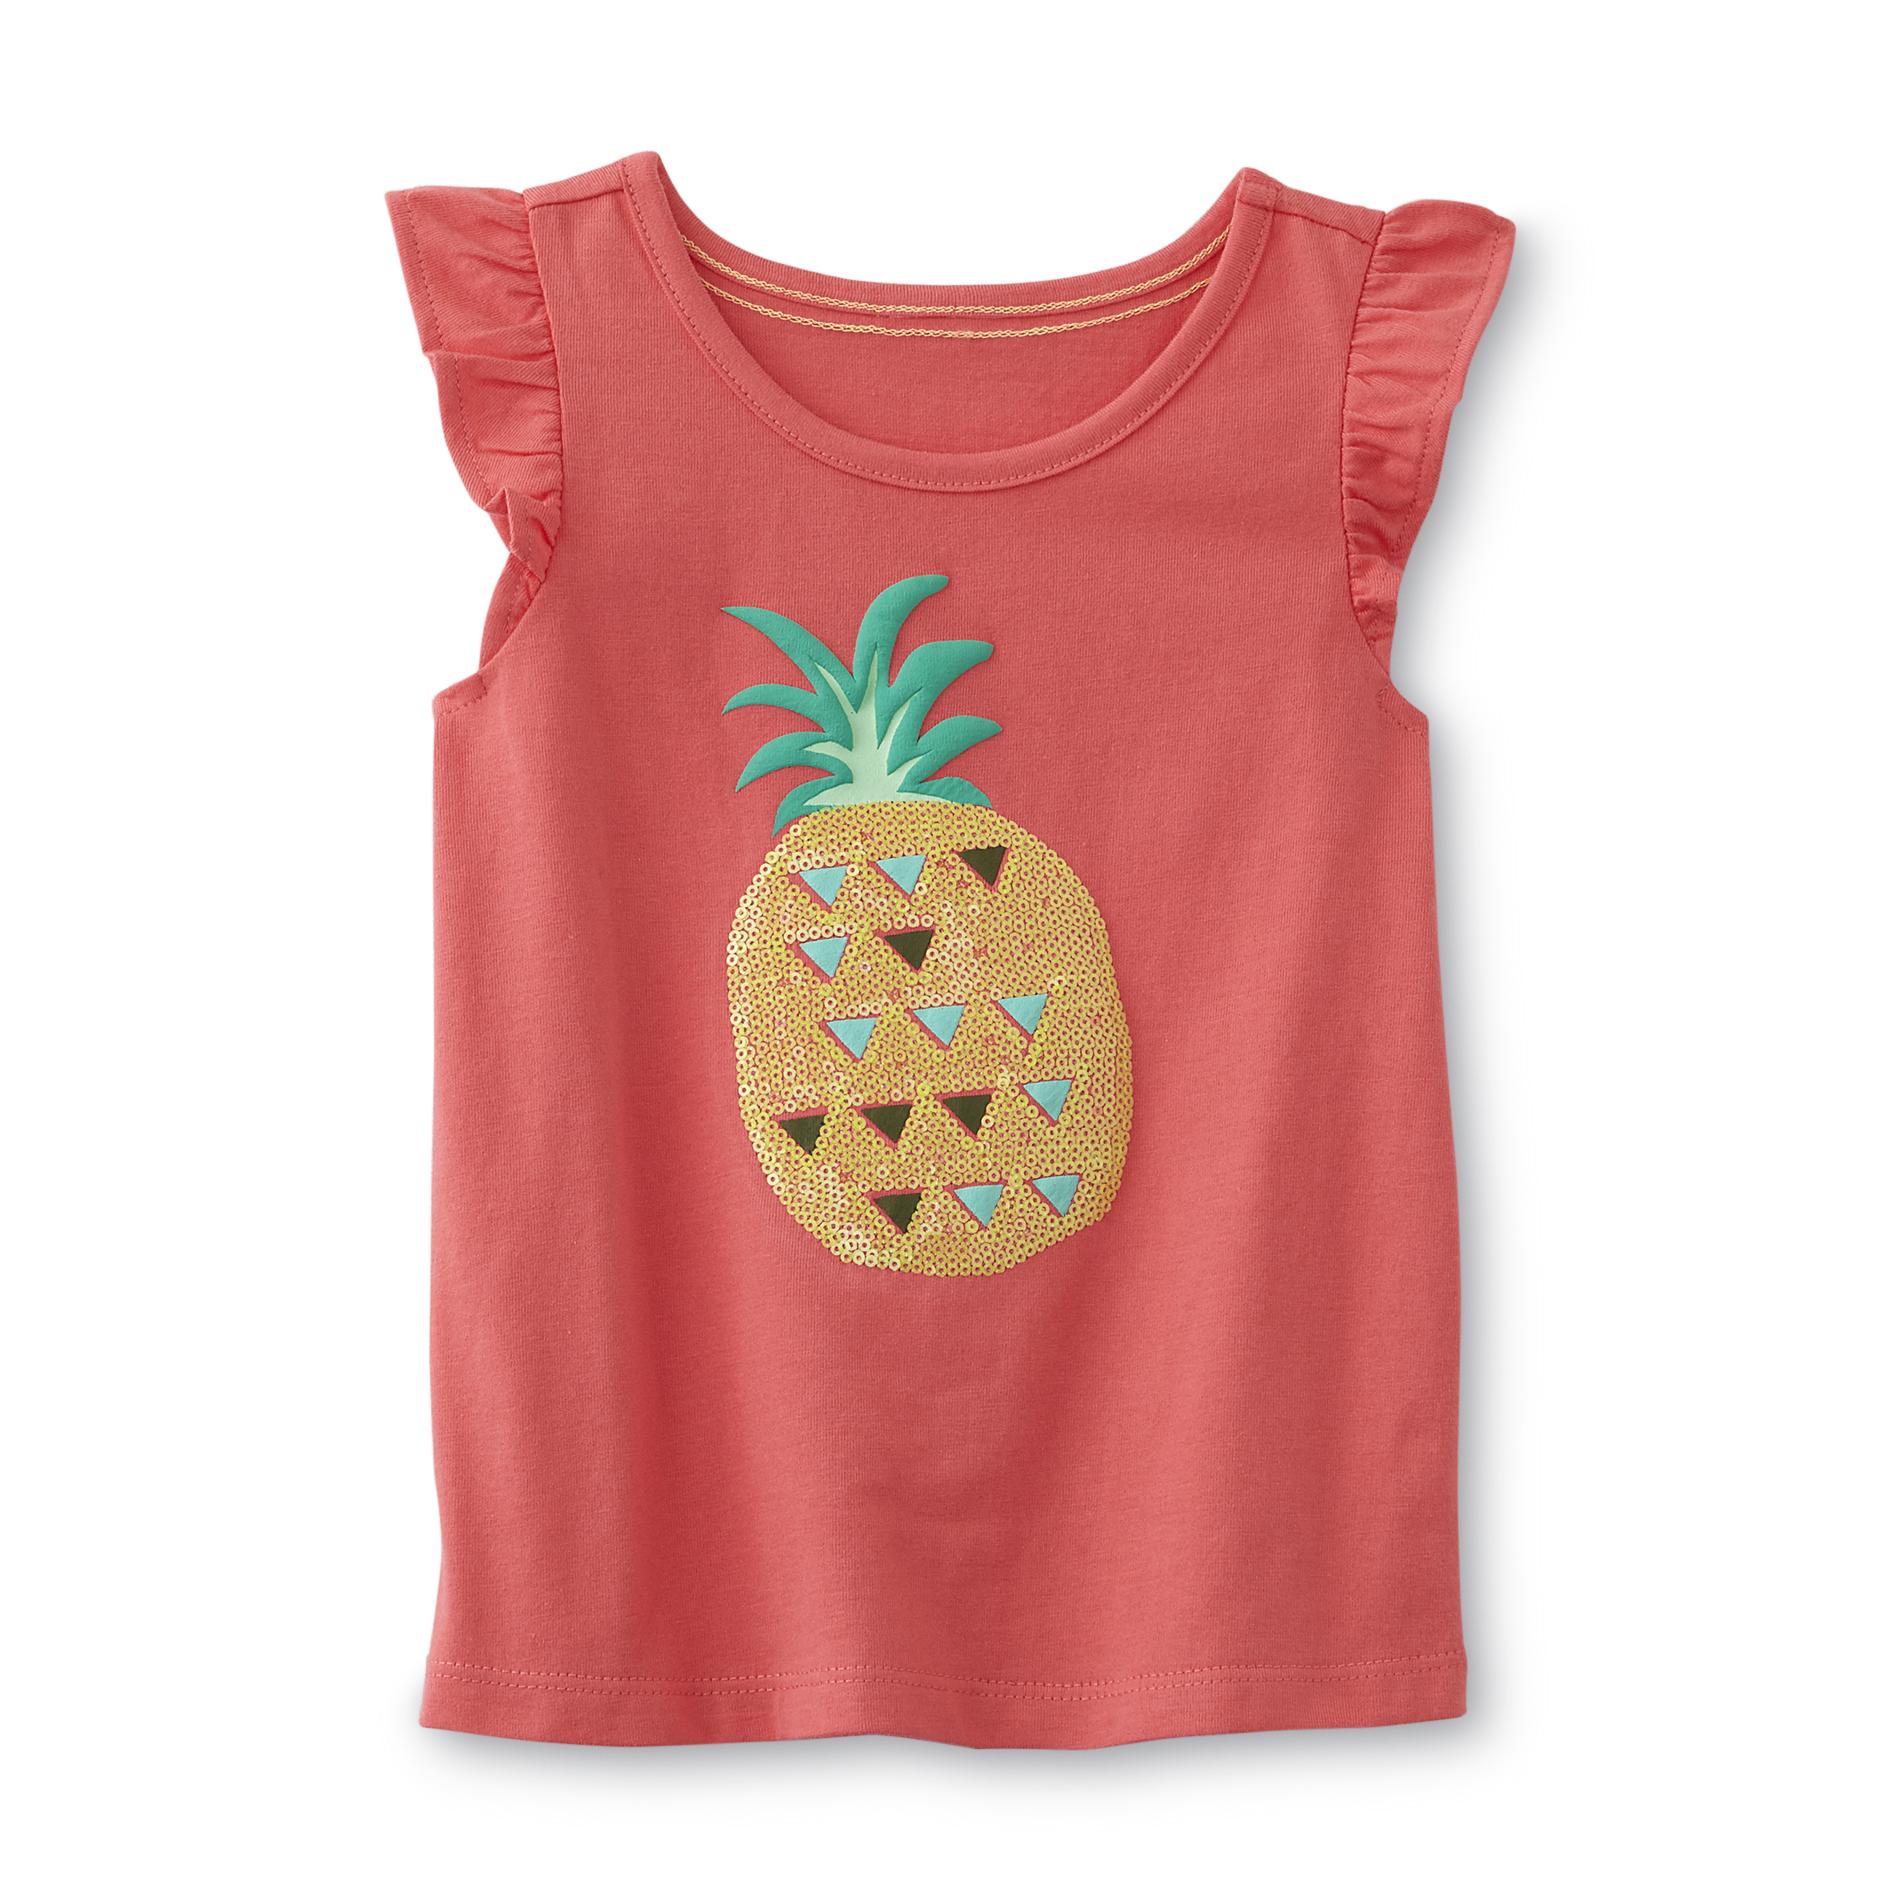 Toughskins Infant & Toddler Girl's Tank Top - Pineapple